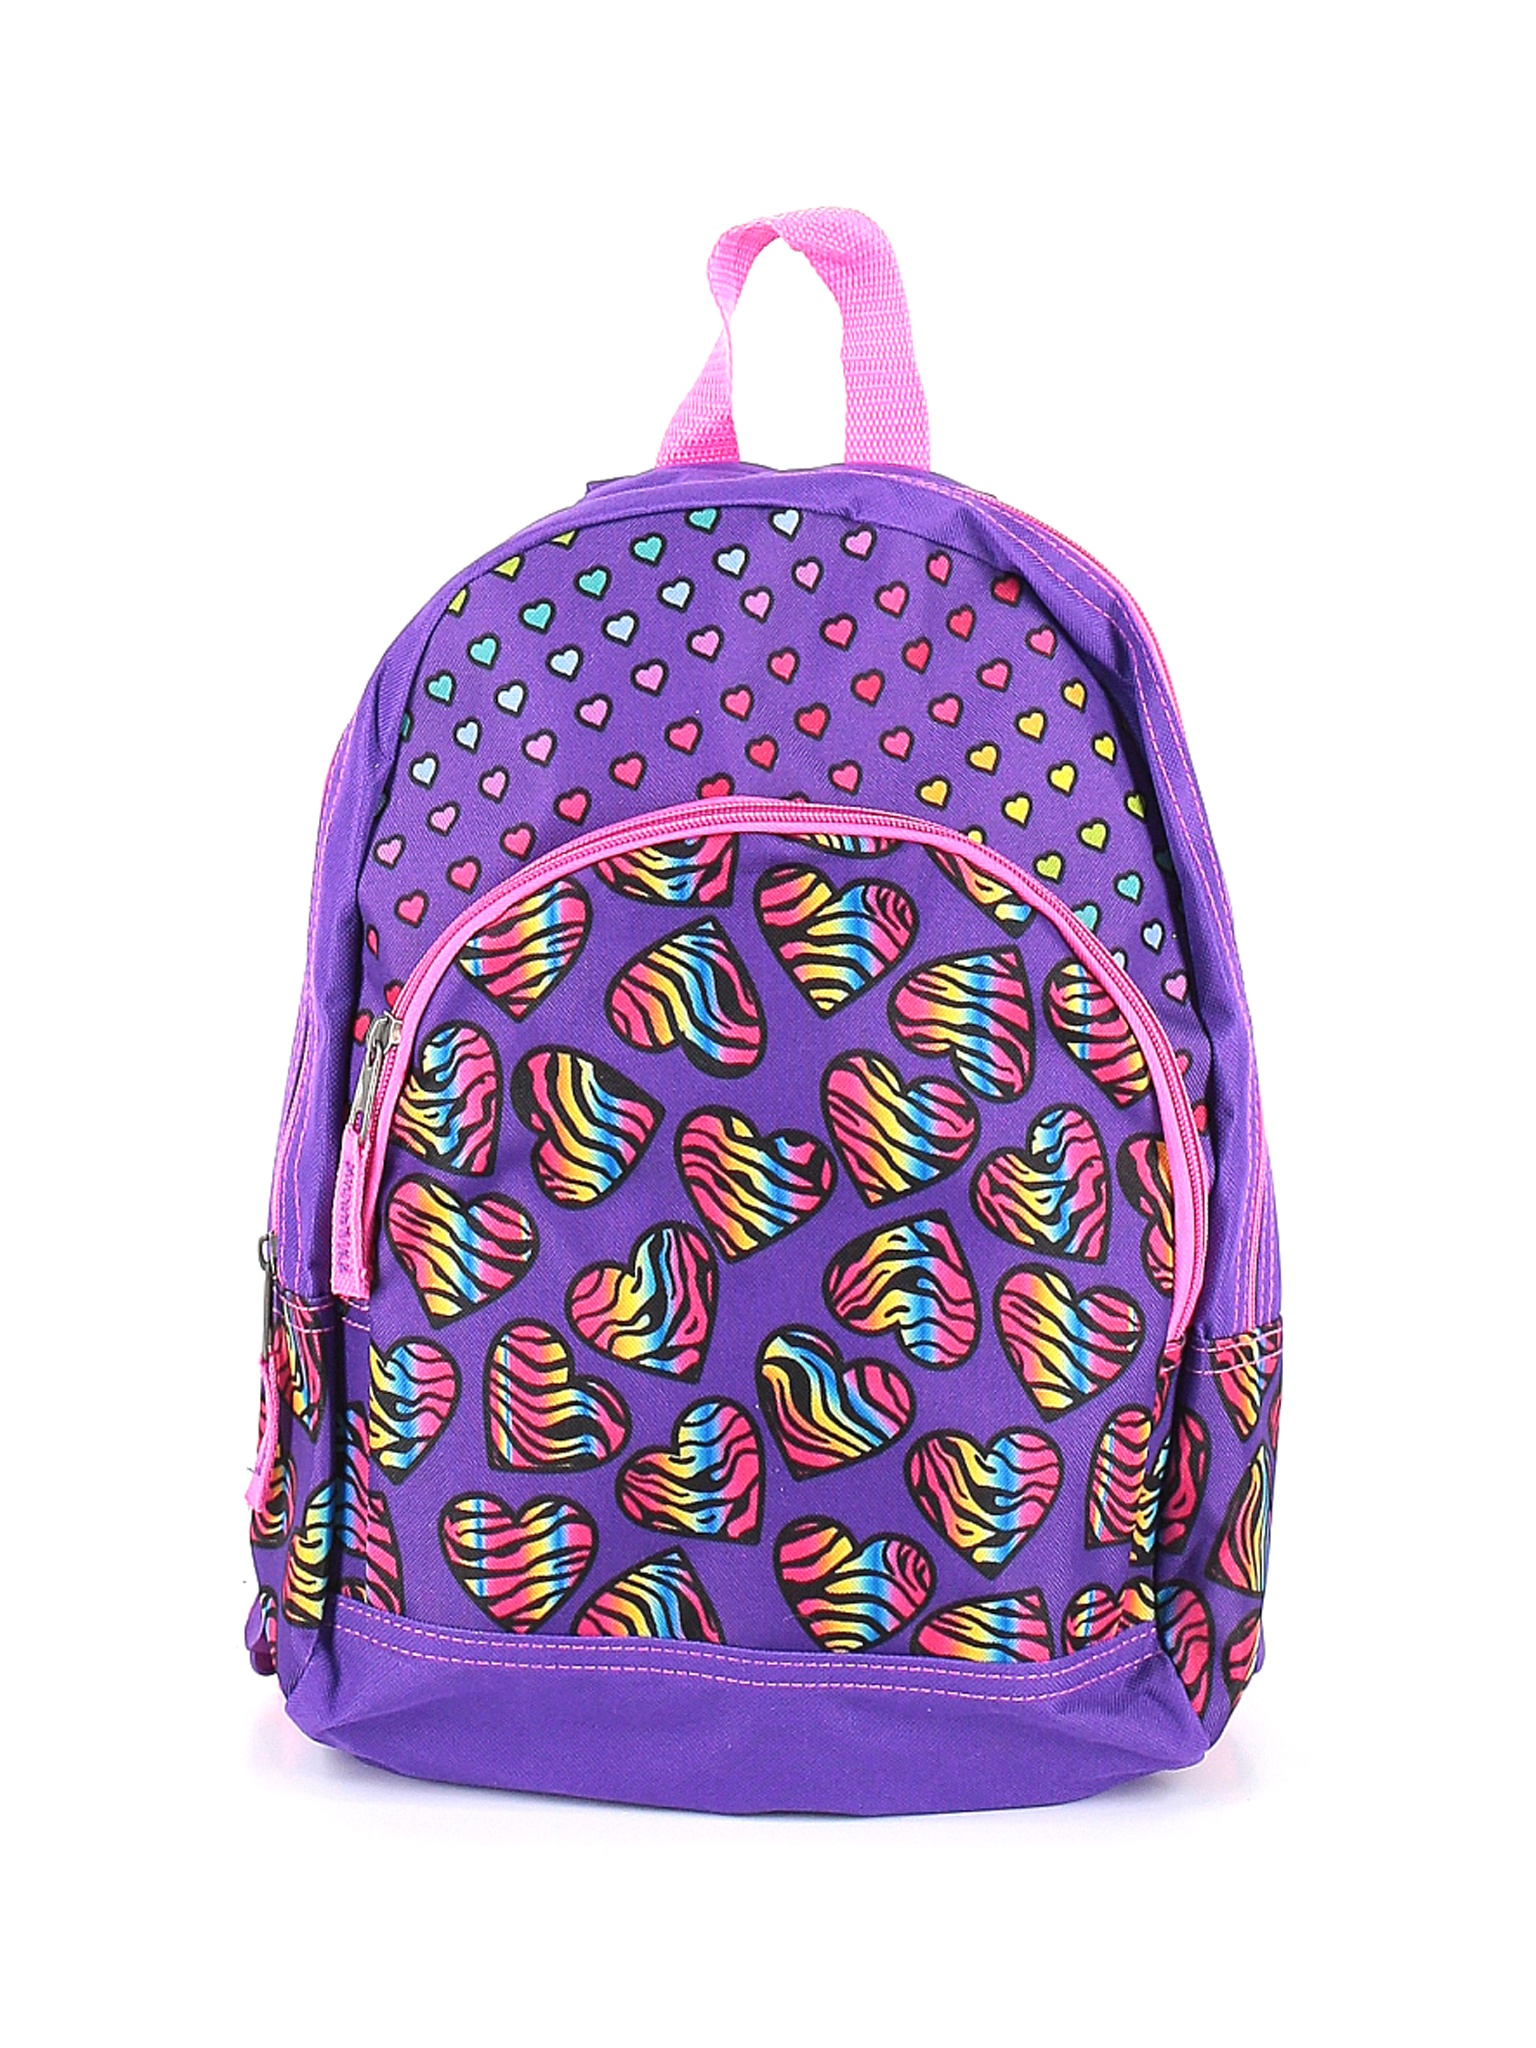 Unbranded Girls Purple Backpack One Size | eBay